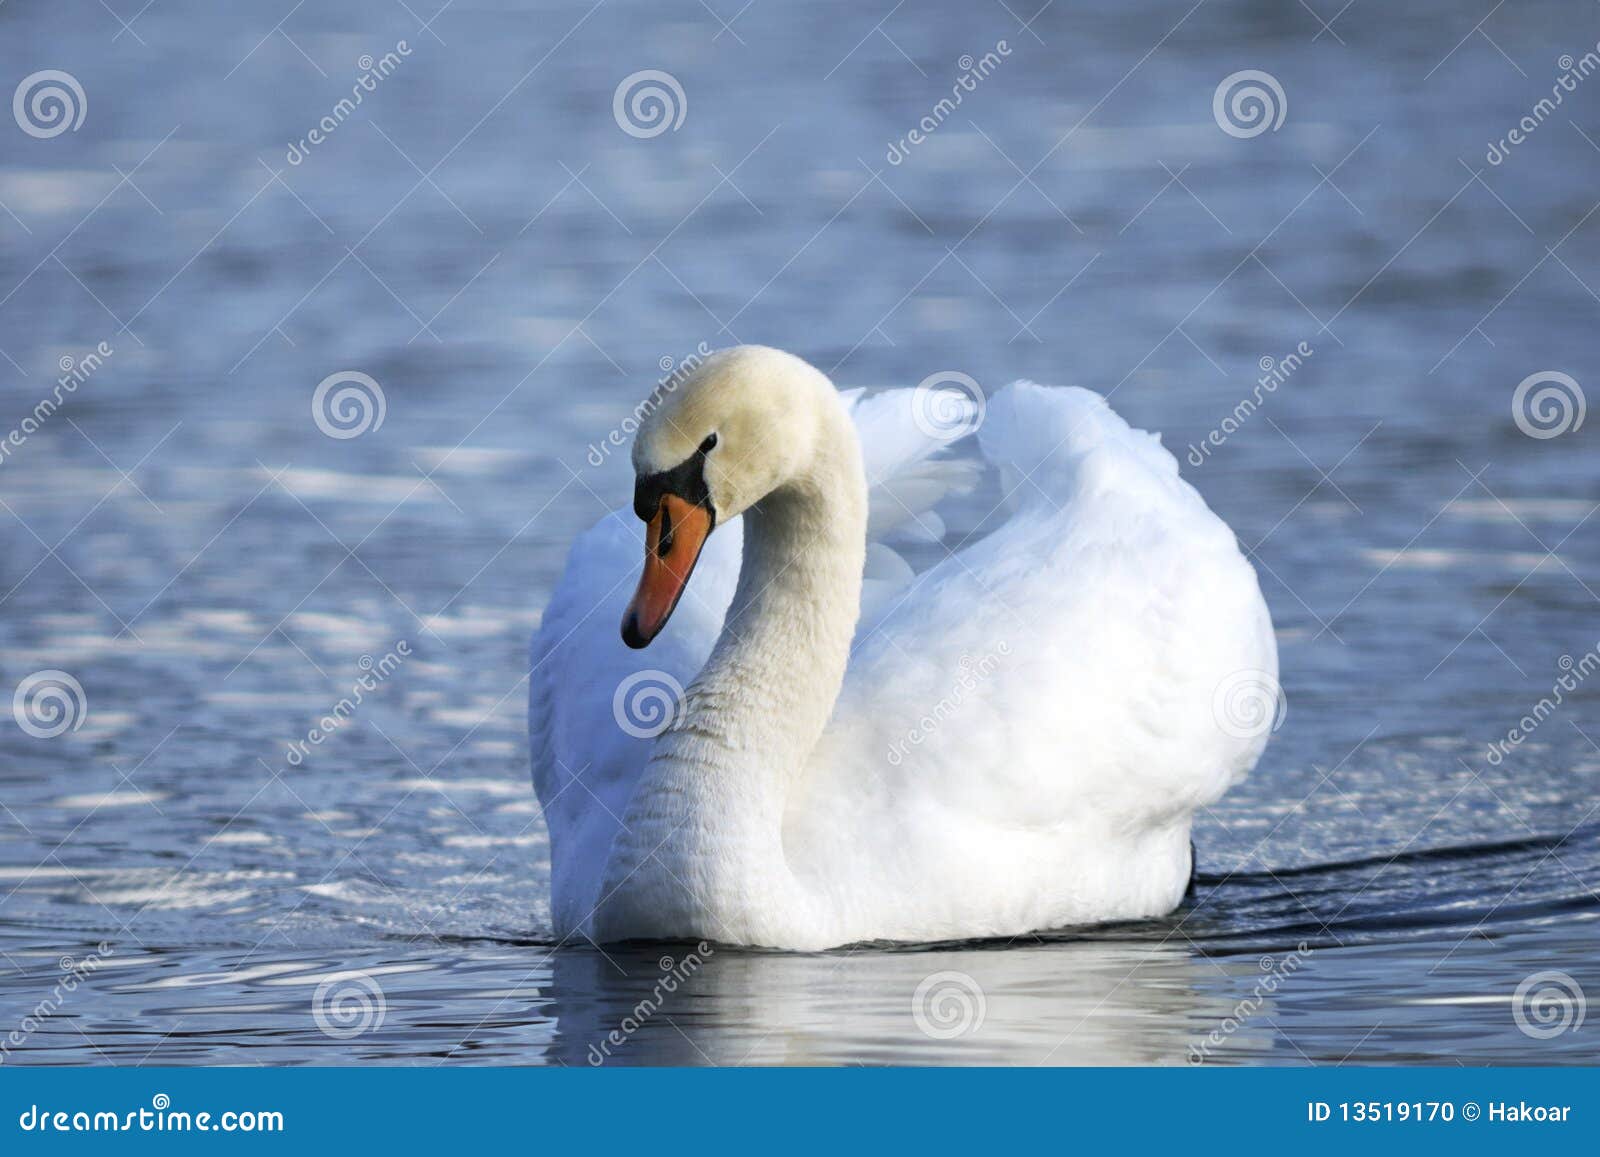 mute swan, cygnus olor